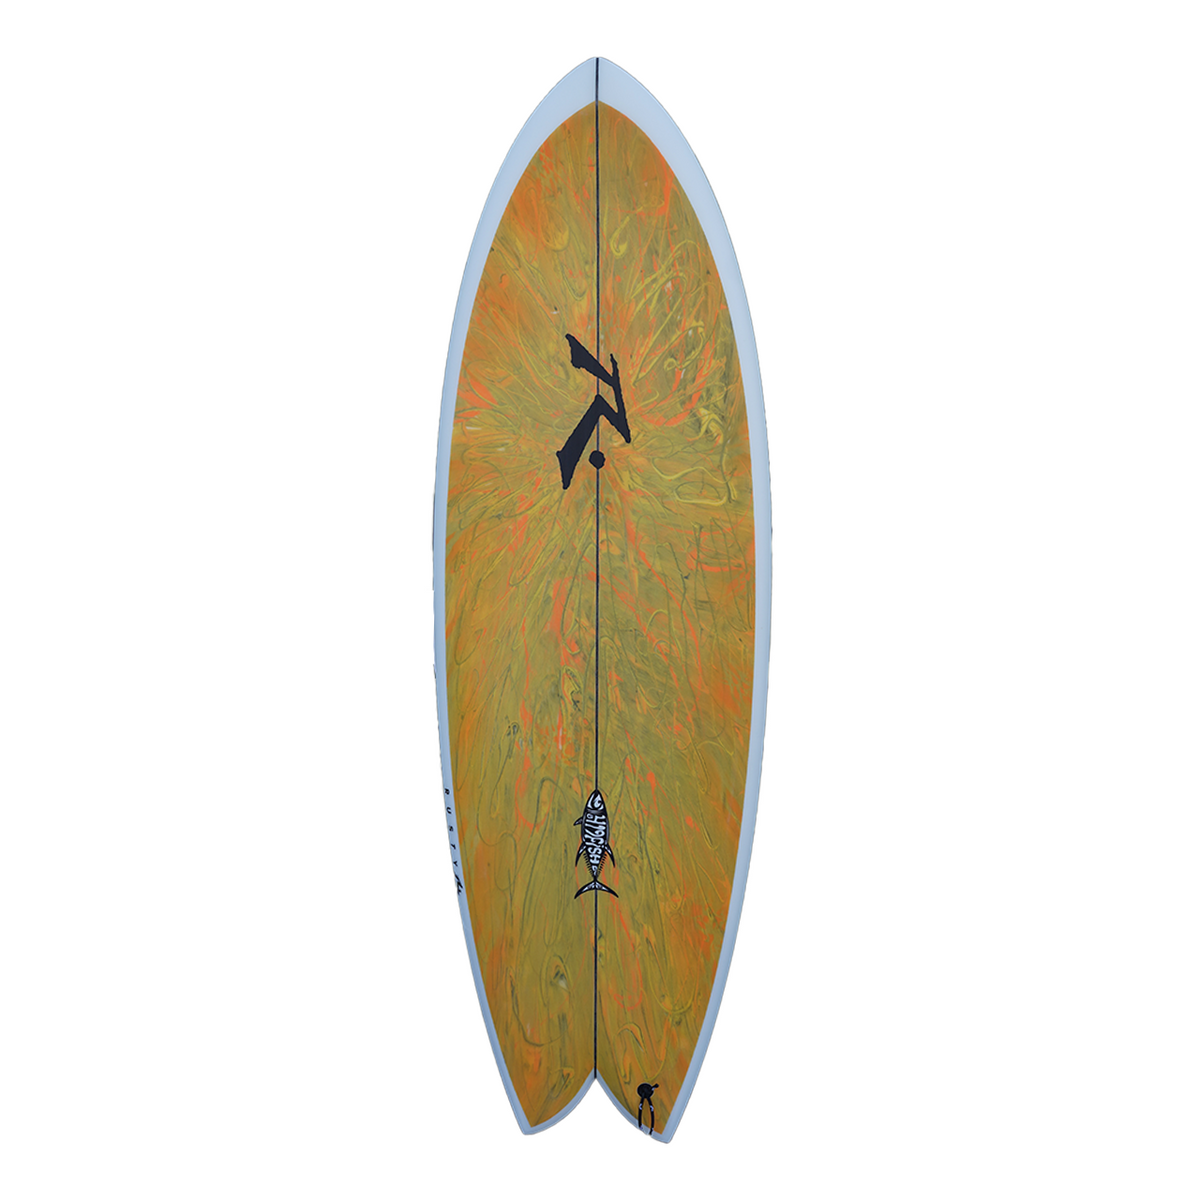 419fish - Alternative - Rusty Surfboards - Top View - Orange Swirl